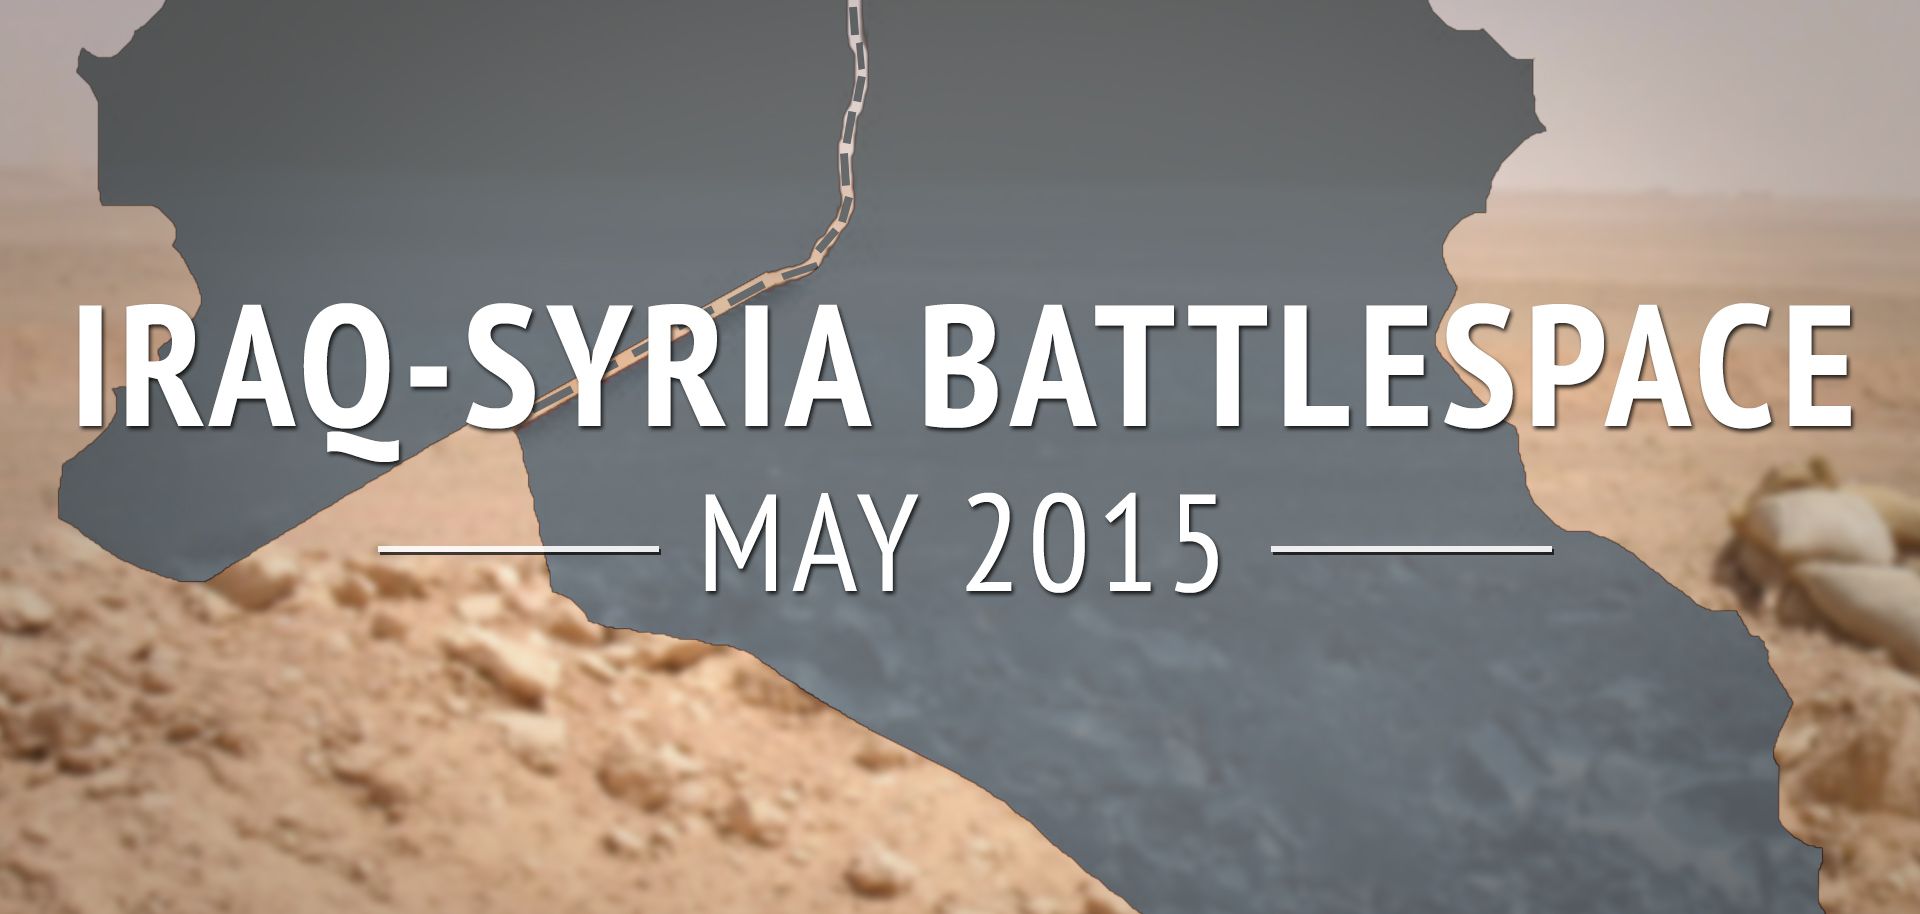 Iraq-Syria Battlespace: May 2015 (DISPLAY)